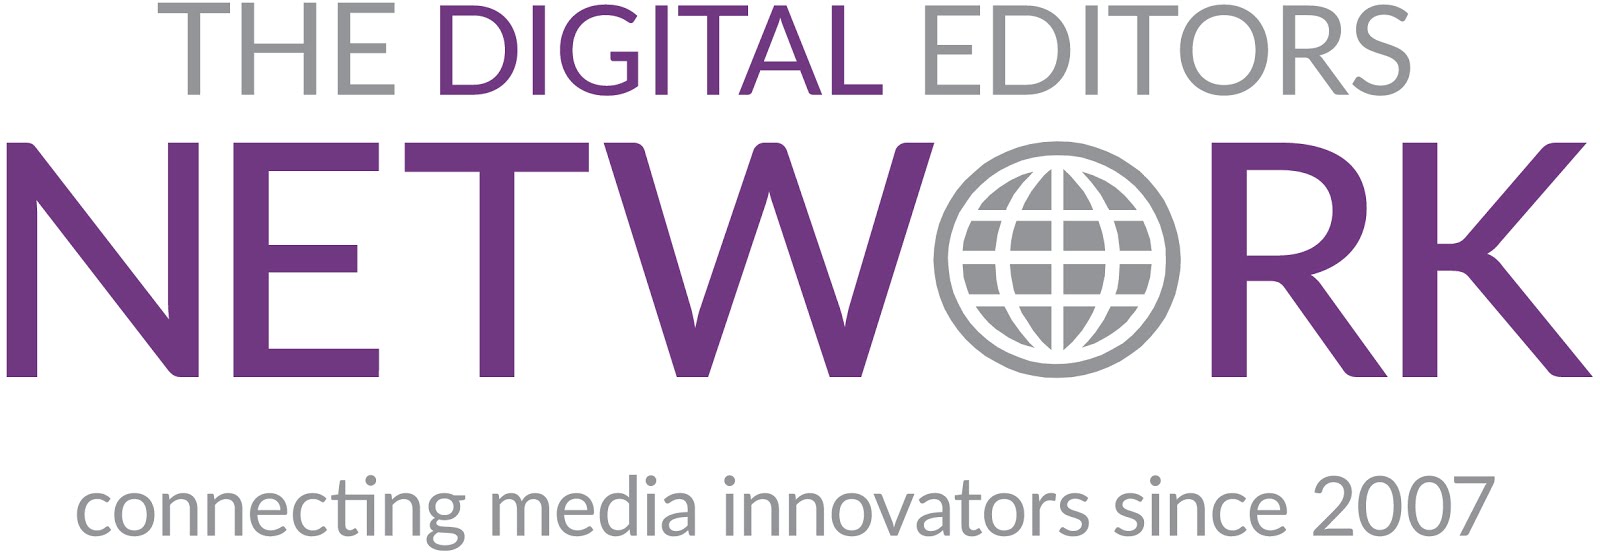 Digital Editors' Network